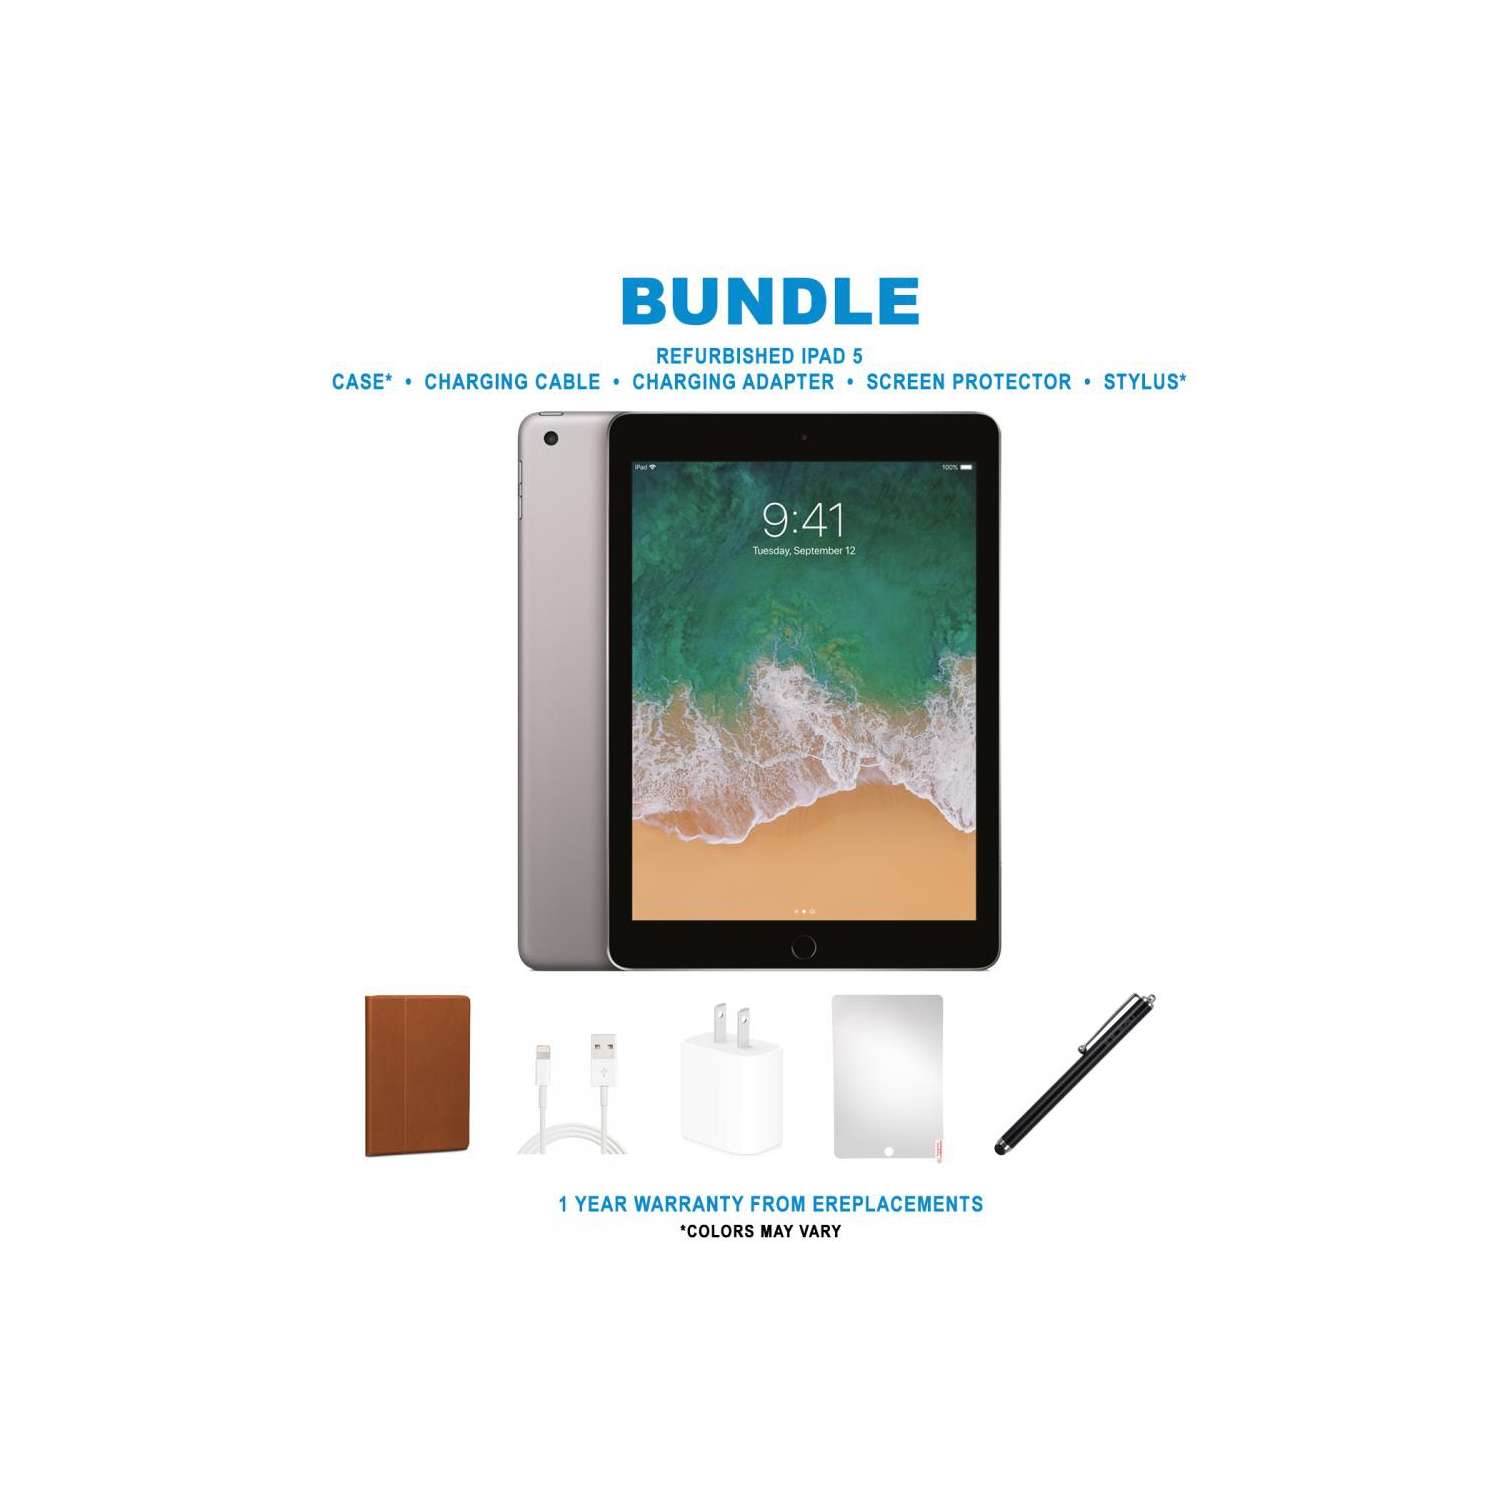 Refurbished (Good) Apple iPad 5 (2017) Bundle, Space Gray, 32GB, Wi-Fi, Case, Stylus Pen, Screen Protector, Charging accessories